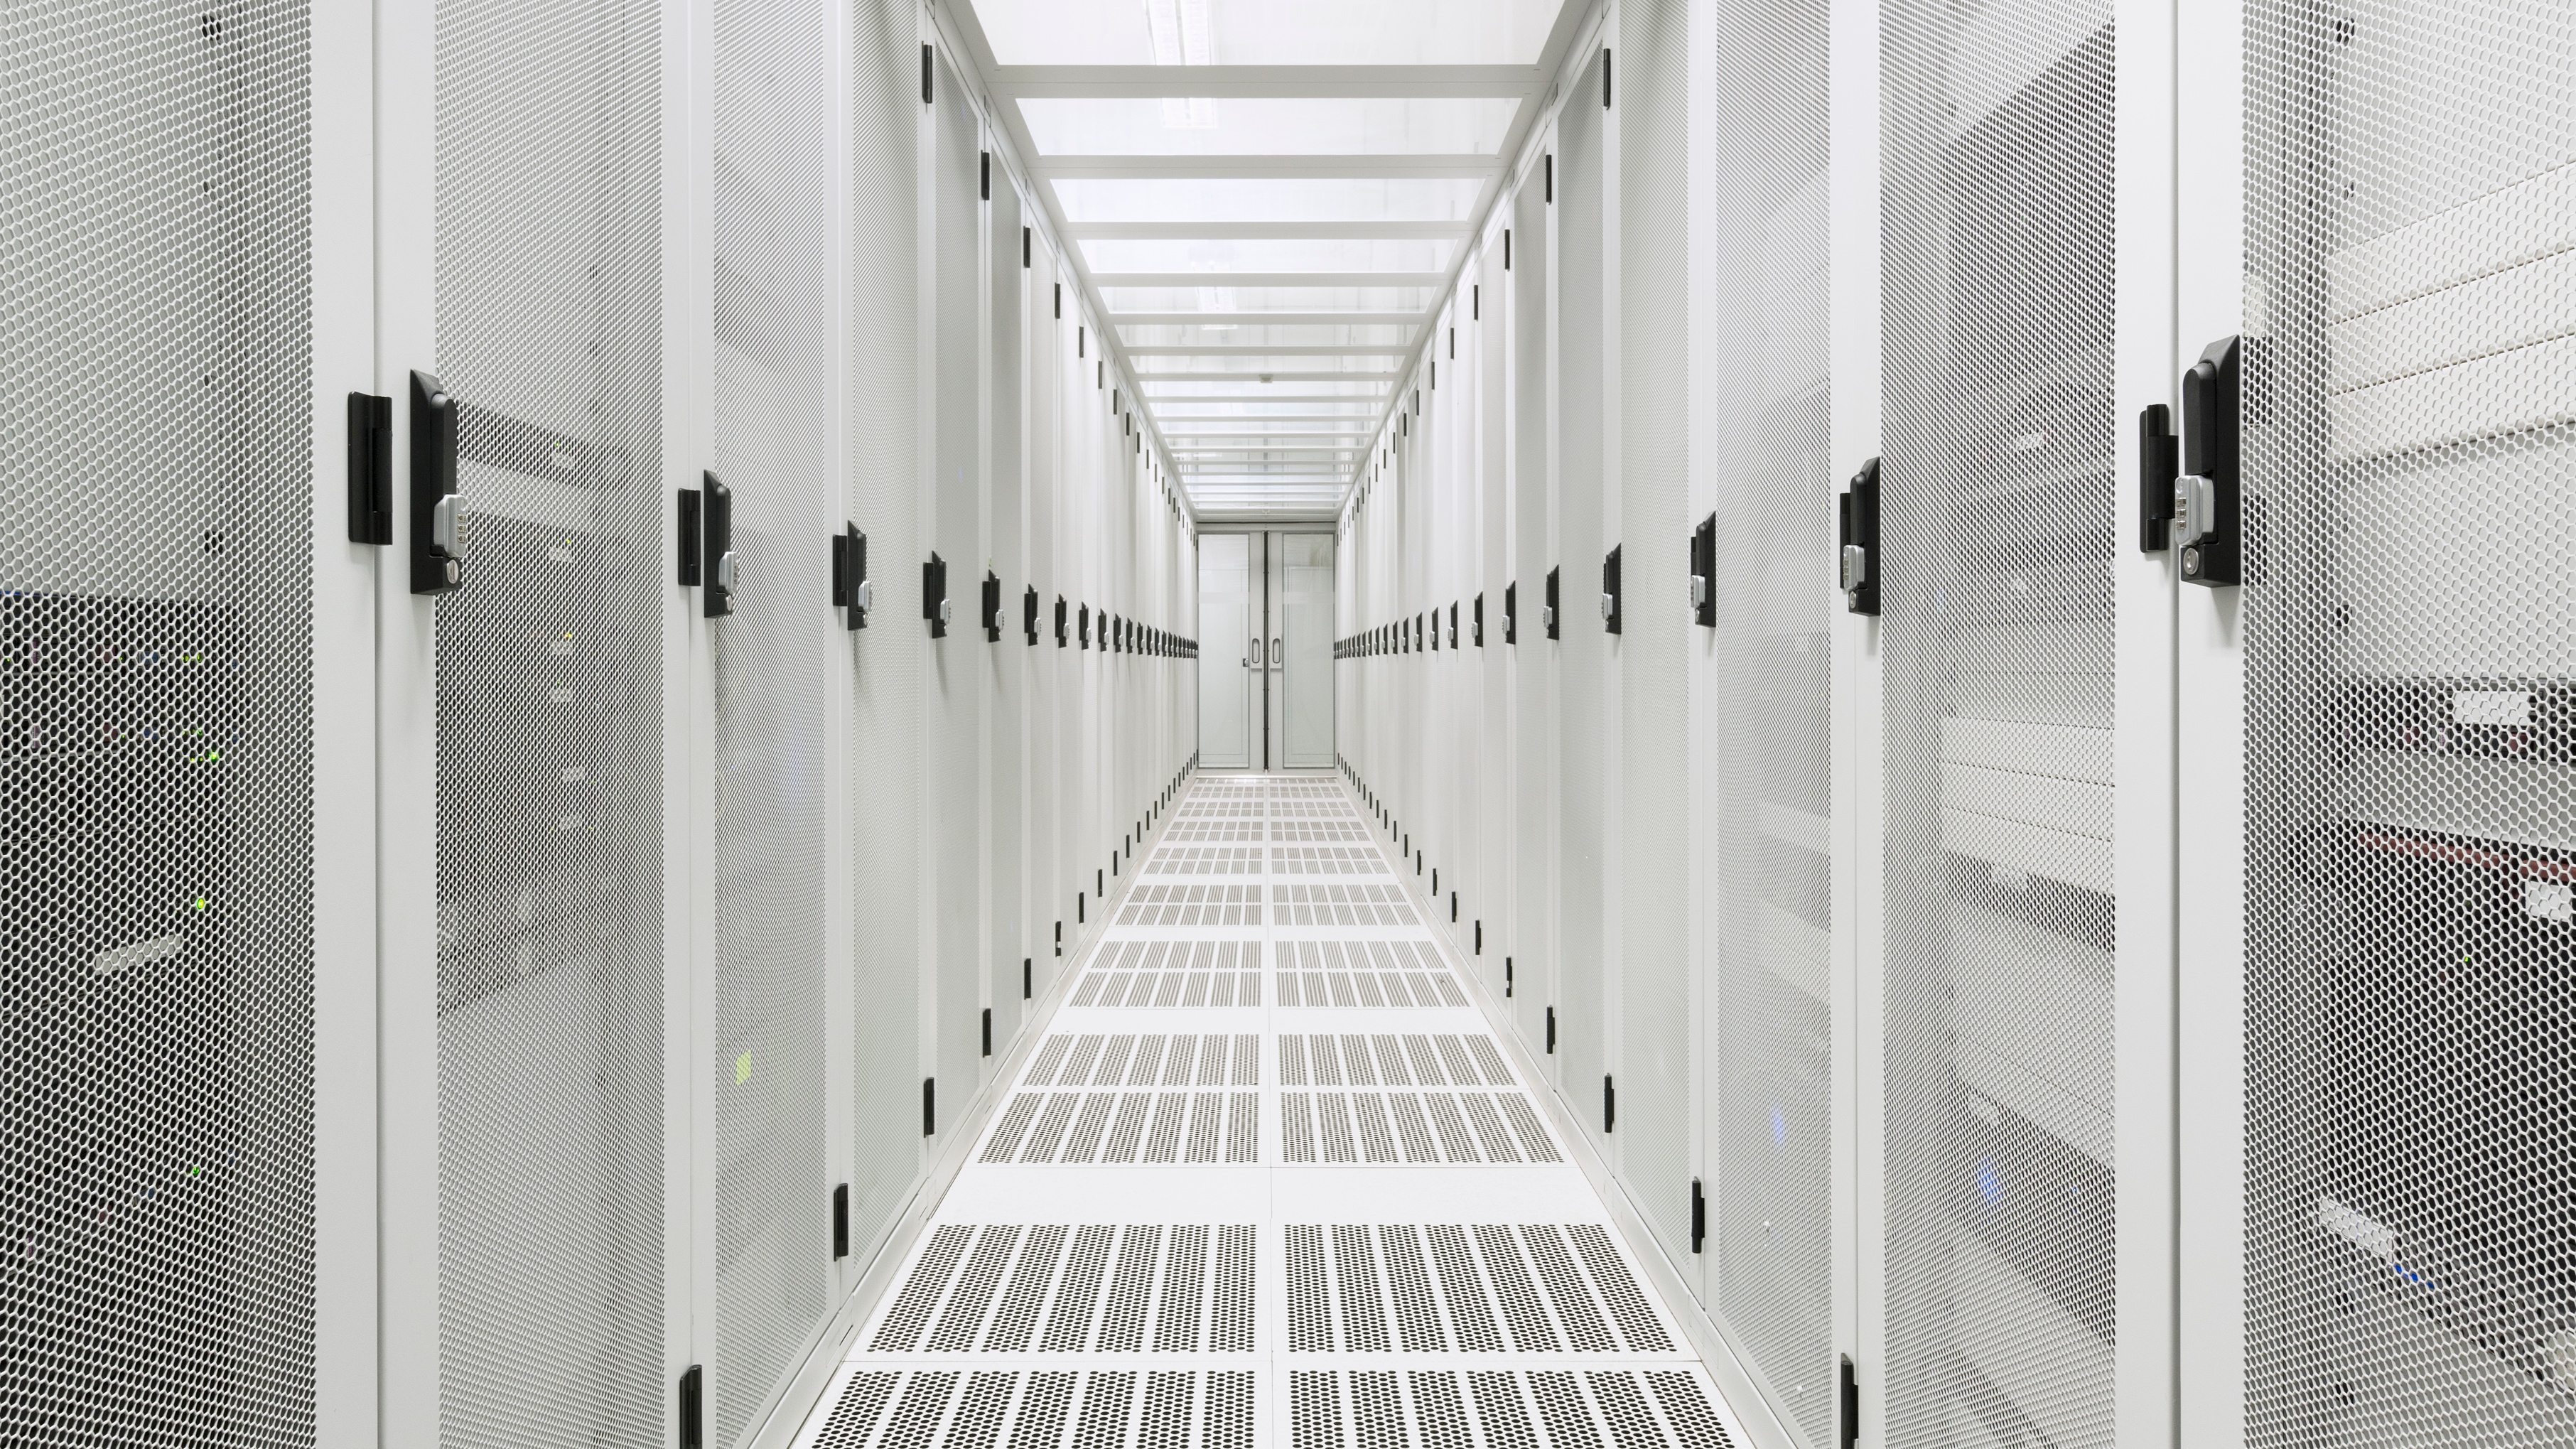 Data storage corridor in data warehouse